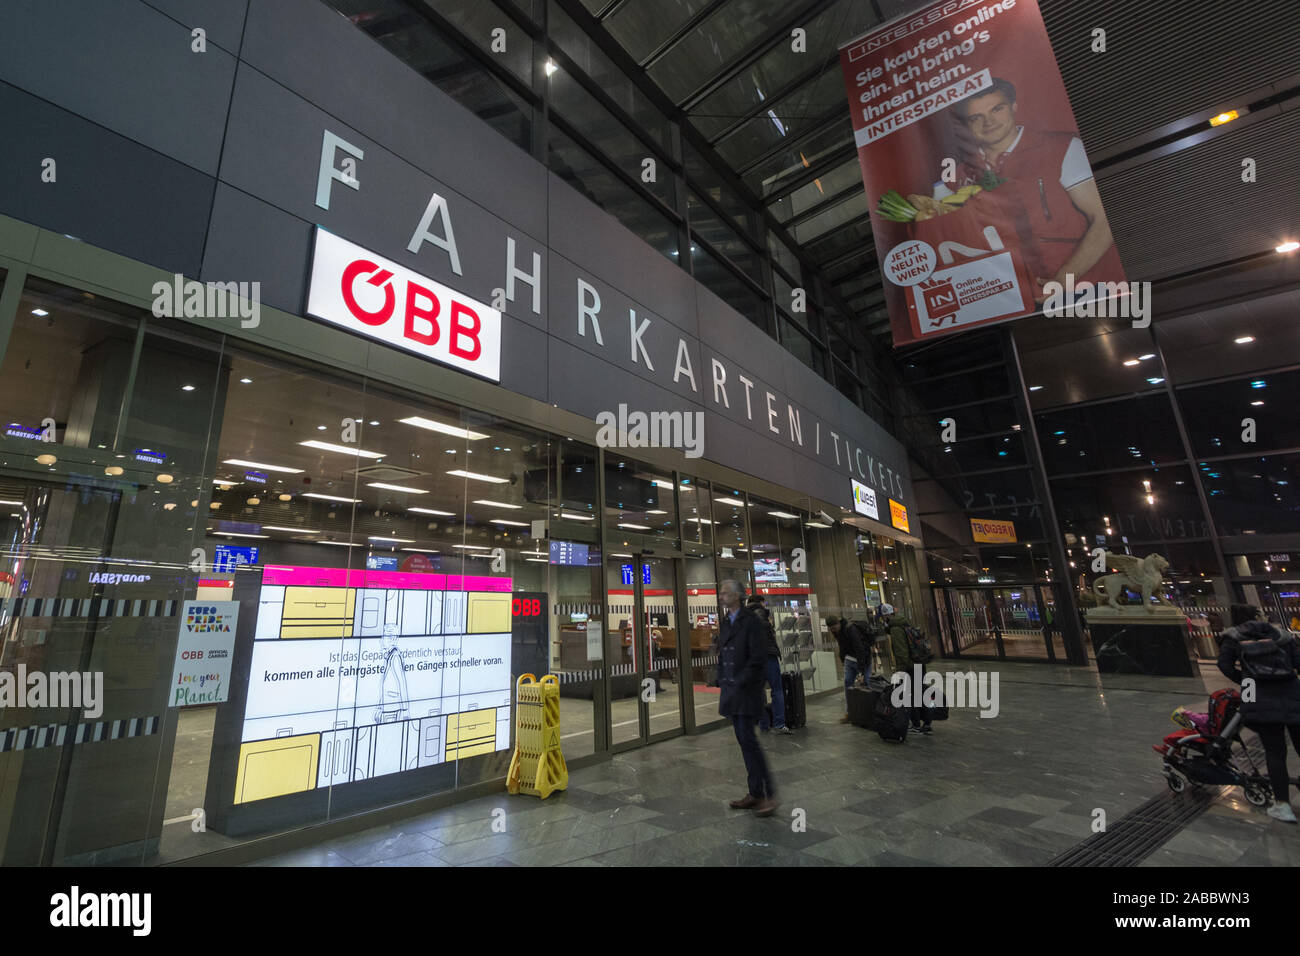 VIENNA, AUSTRIA - NOVEMBER 6, 2019: OBB logo in front of Wien Hauptbahnhof ticket counter, in the main railway station of Vienna. OBB is the main rail Stock Photo